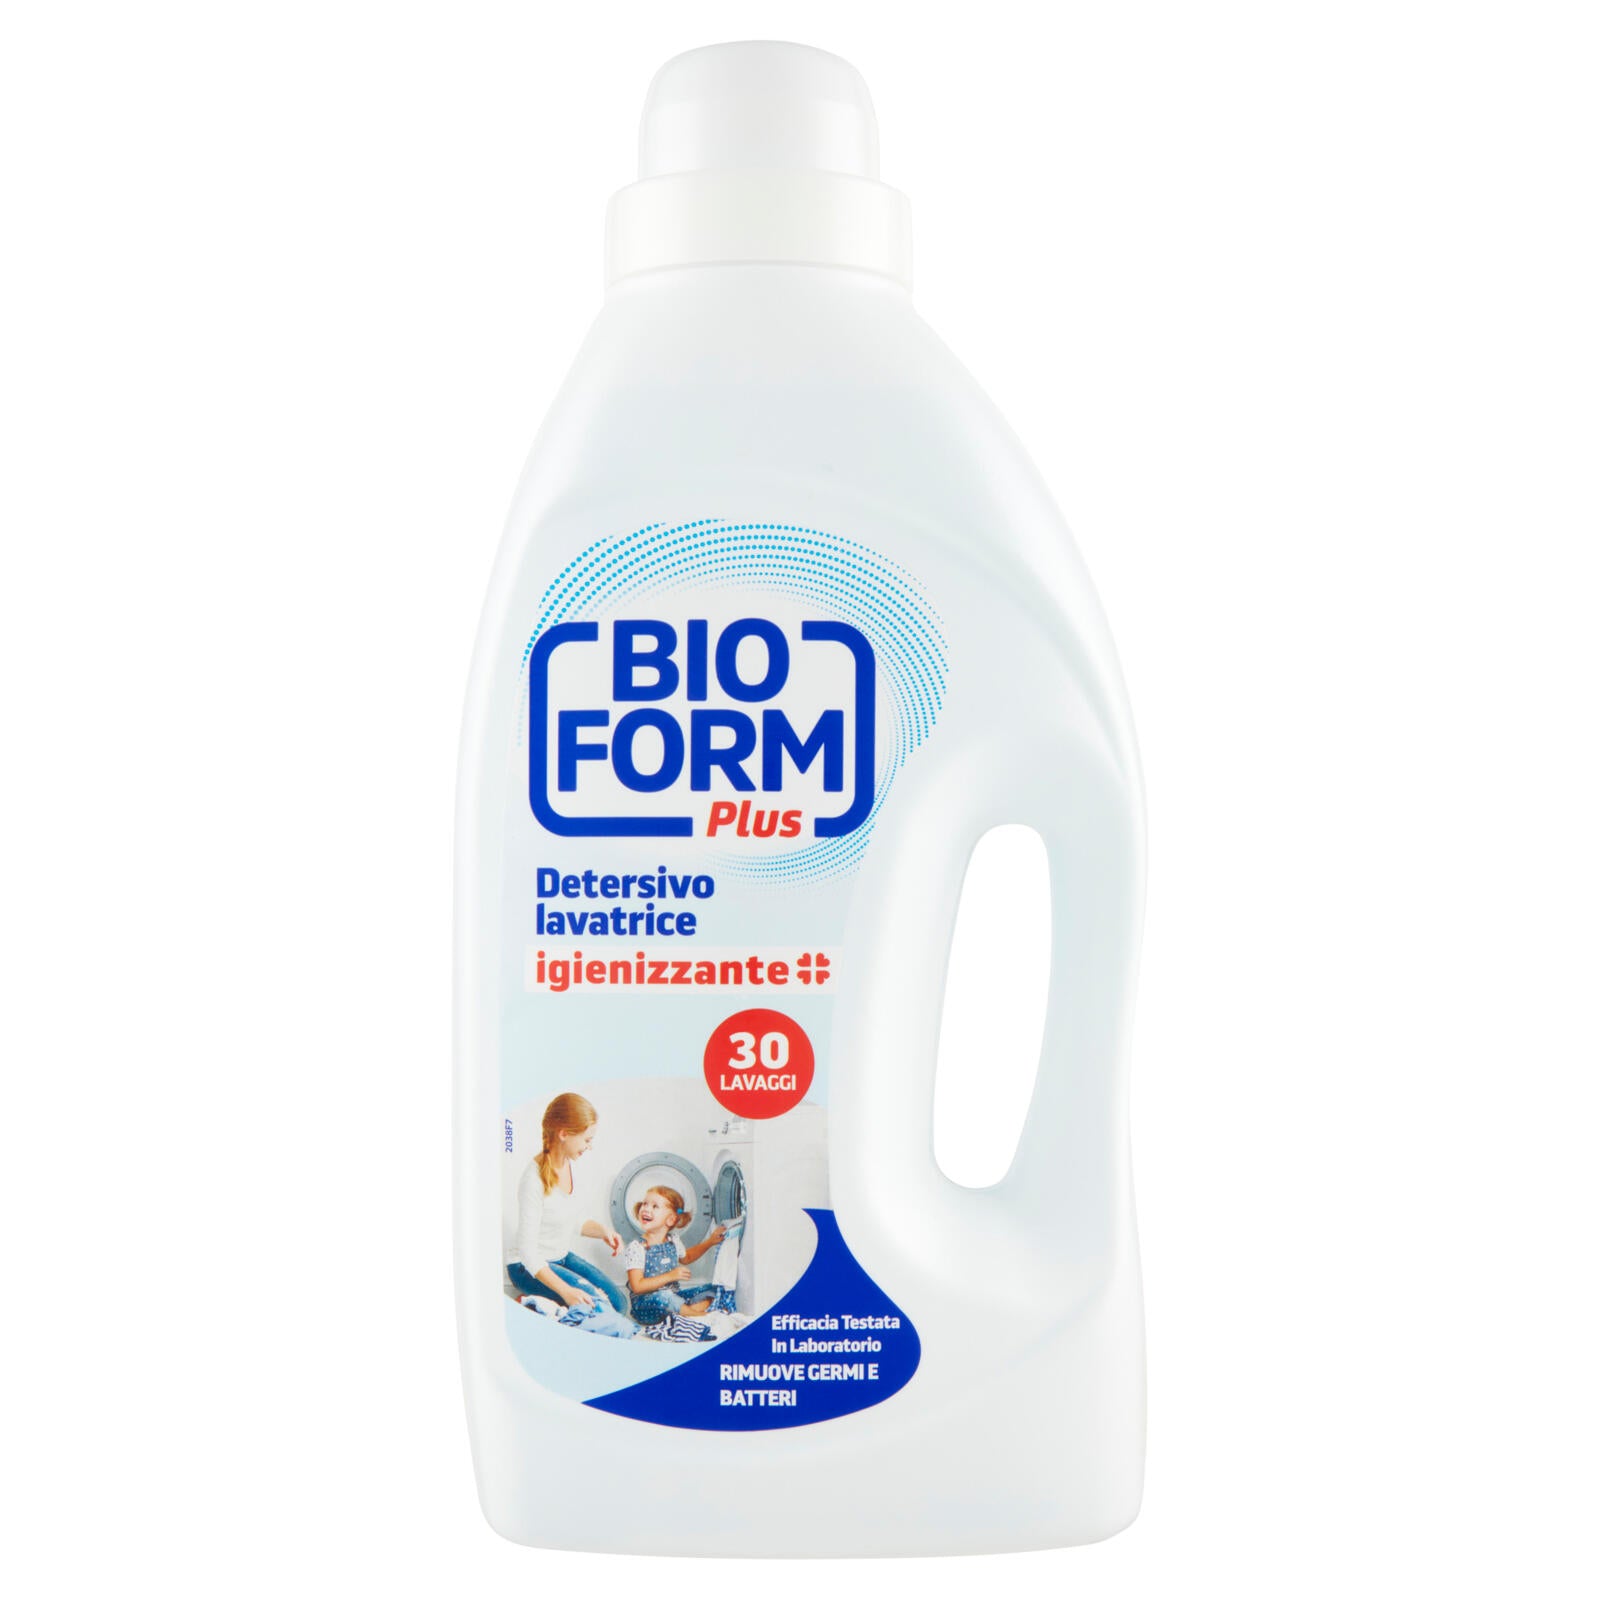 Bioform Plus Detersivo lavatrice igienizzante 1625 ml ->